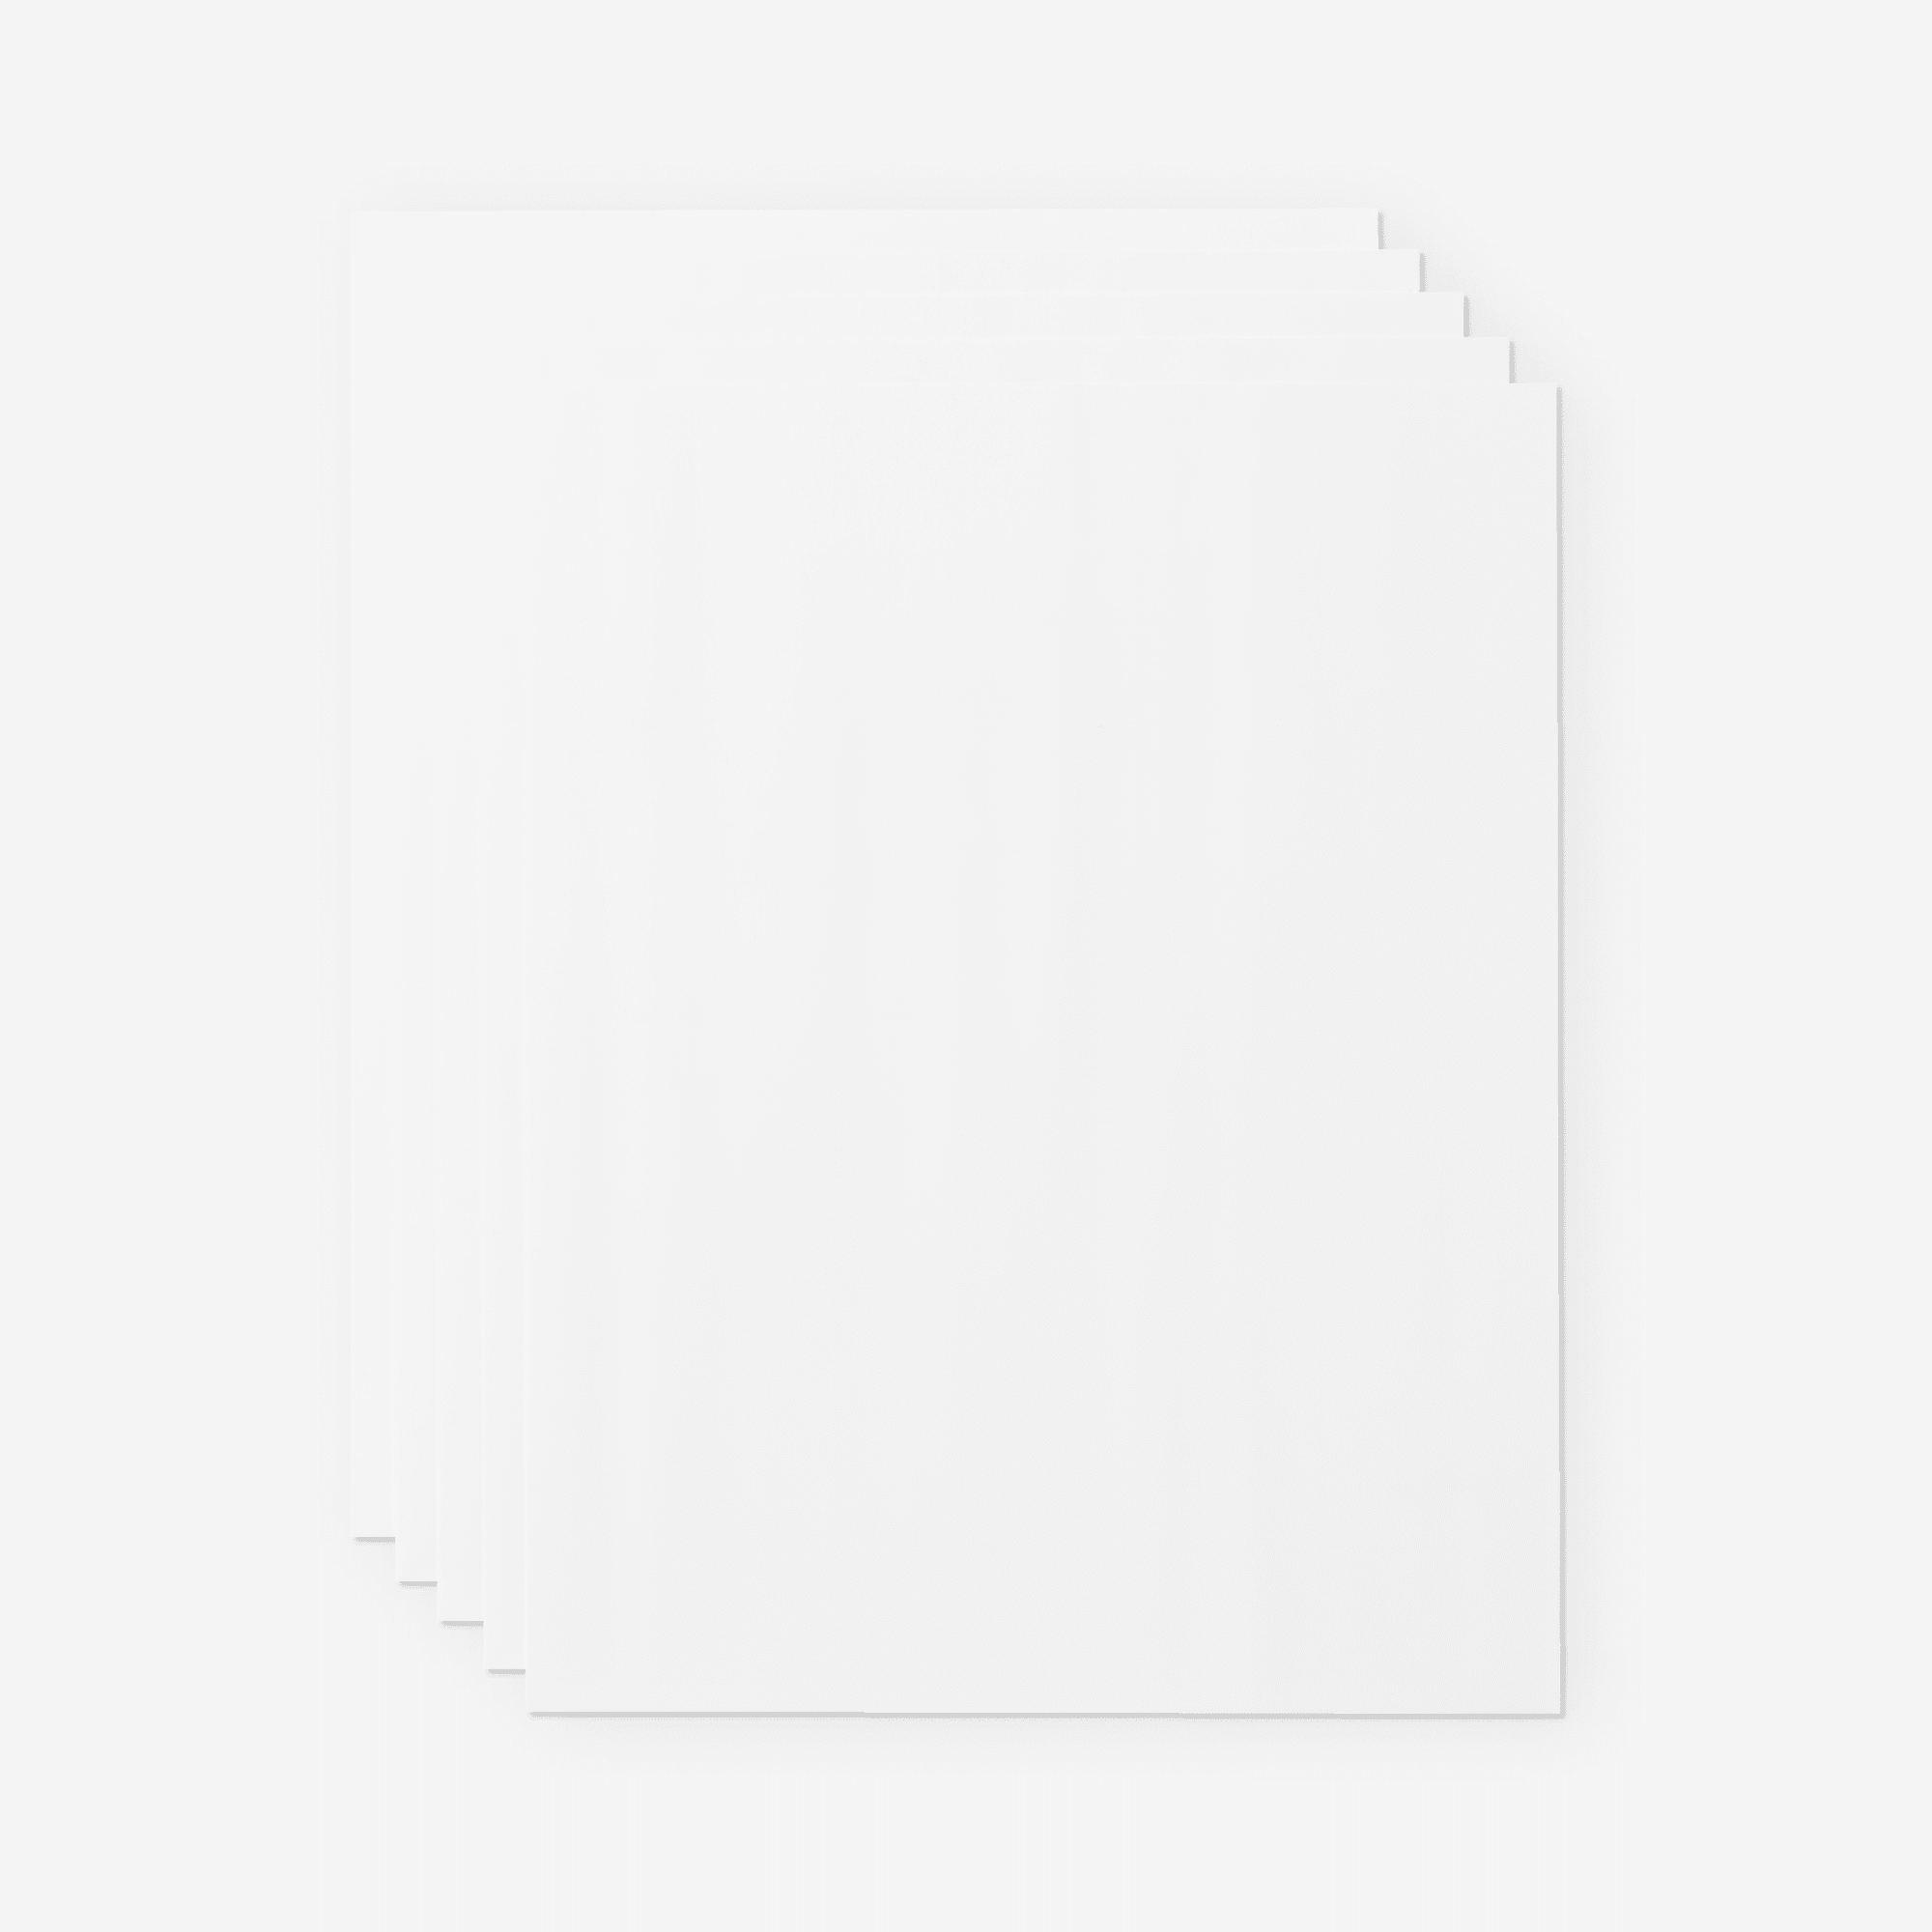 Cricut Printable Iron-On For Light Fabrics - US Letter (5 ct